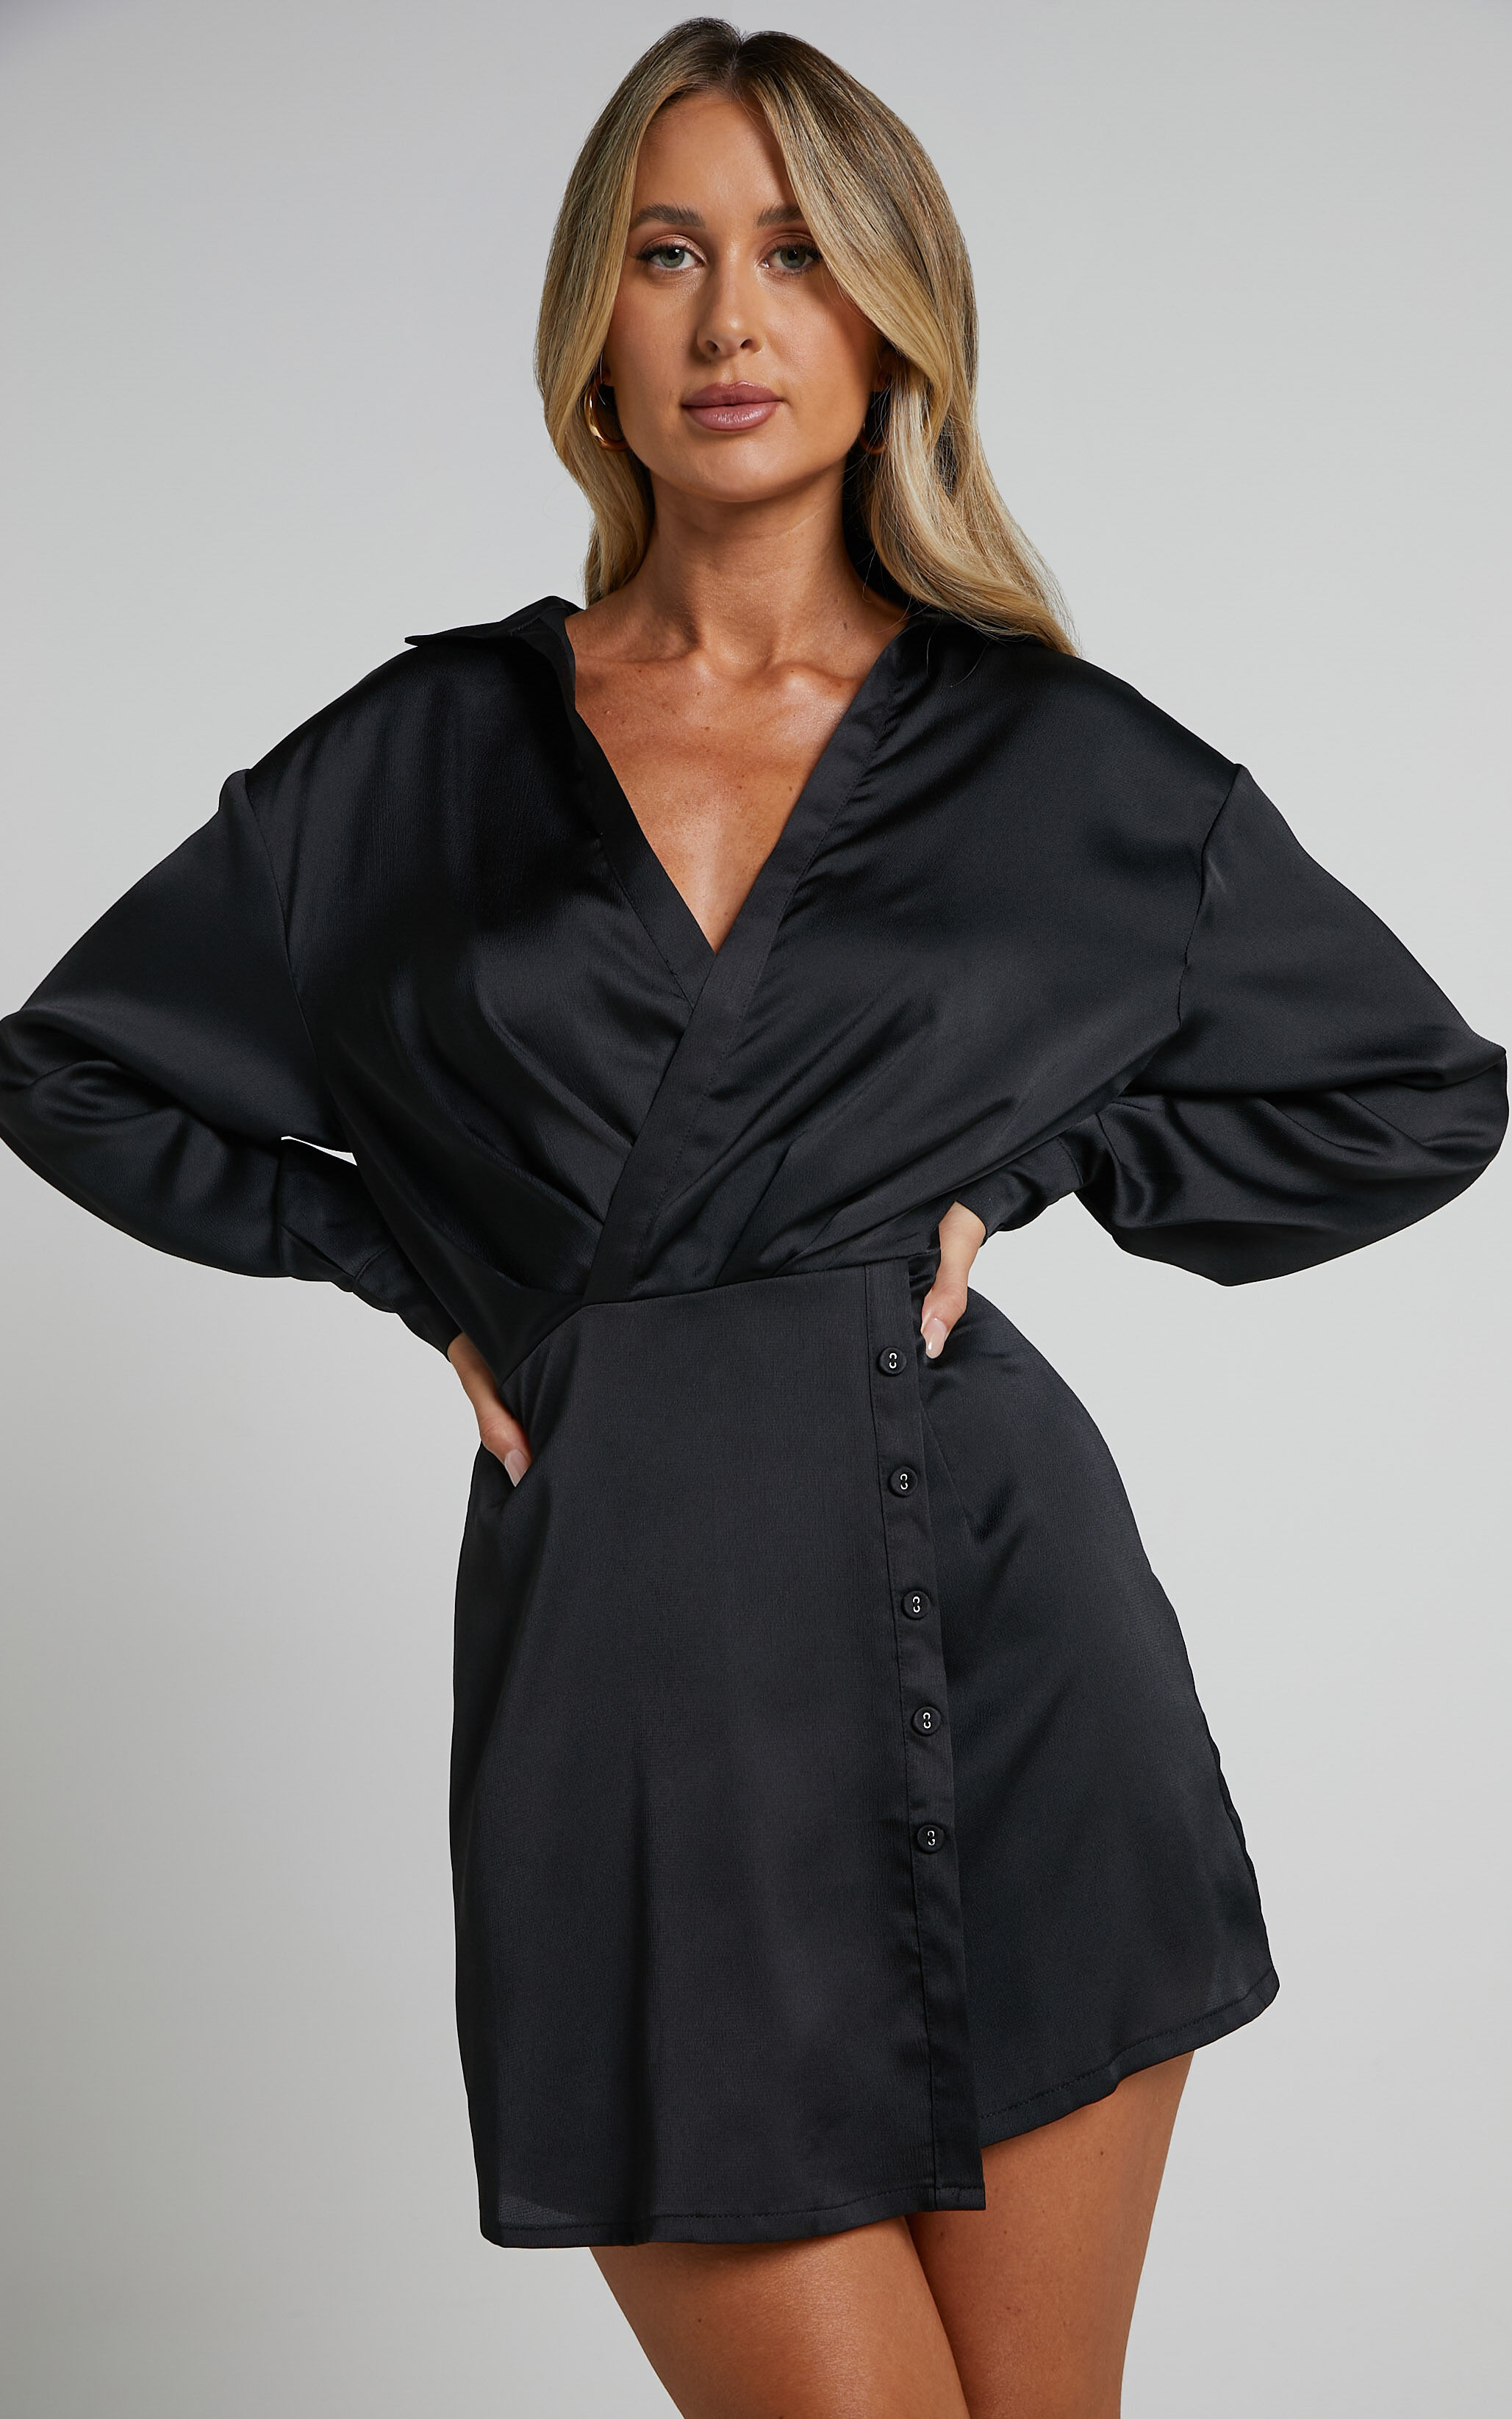 Mijella Long Sleeve Button Up Dress in Black - 04, BLK1, super-hi-res image number null